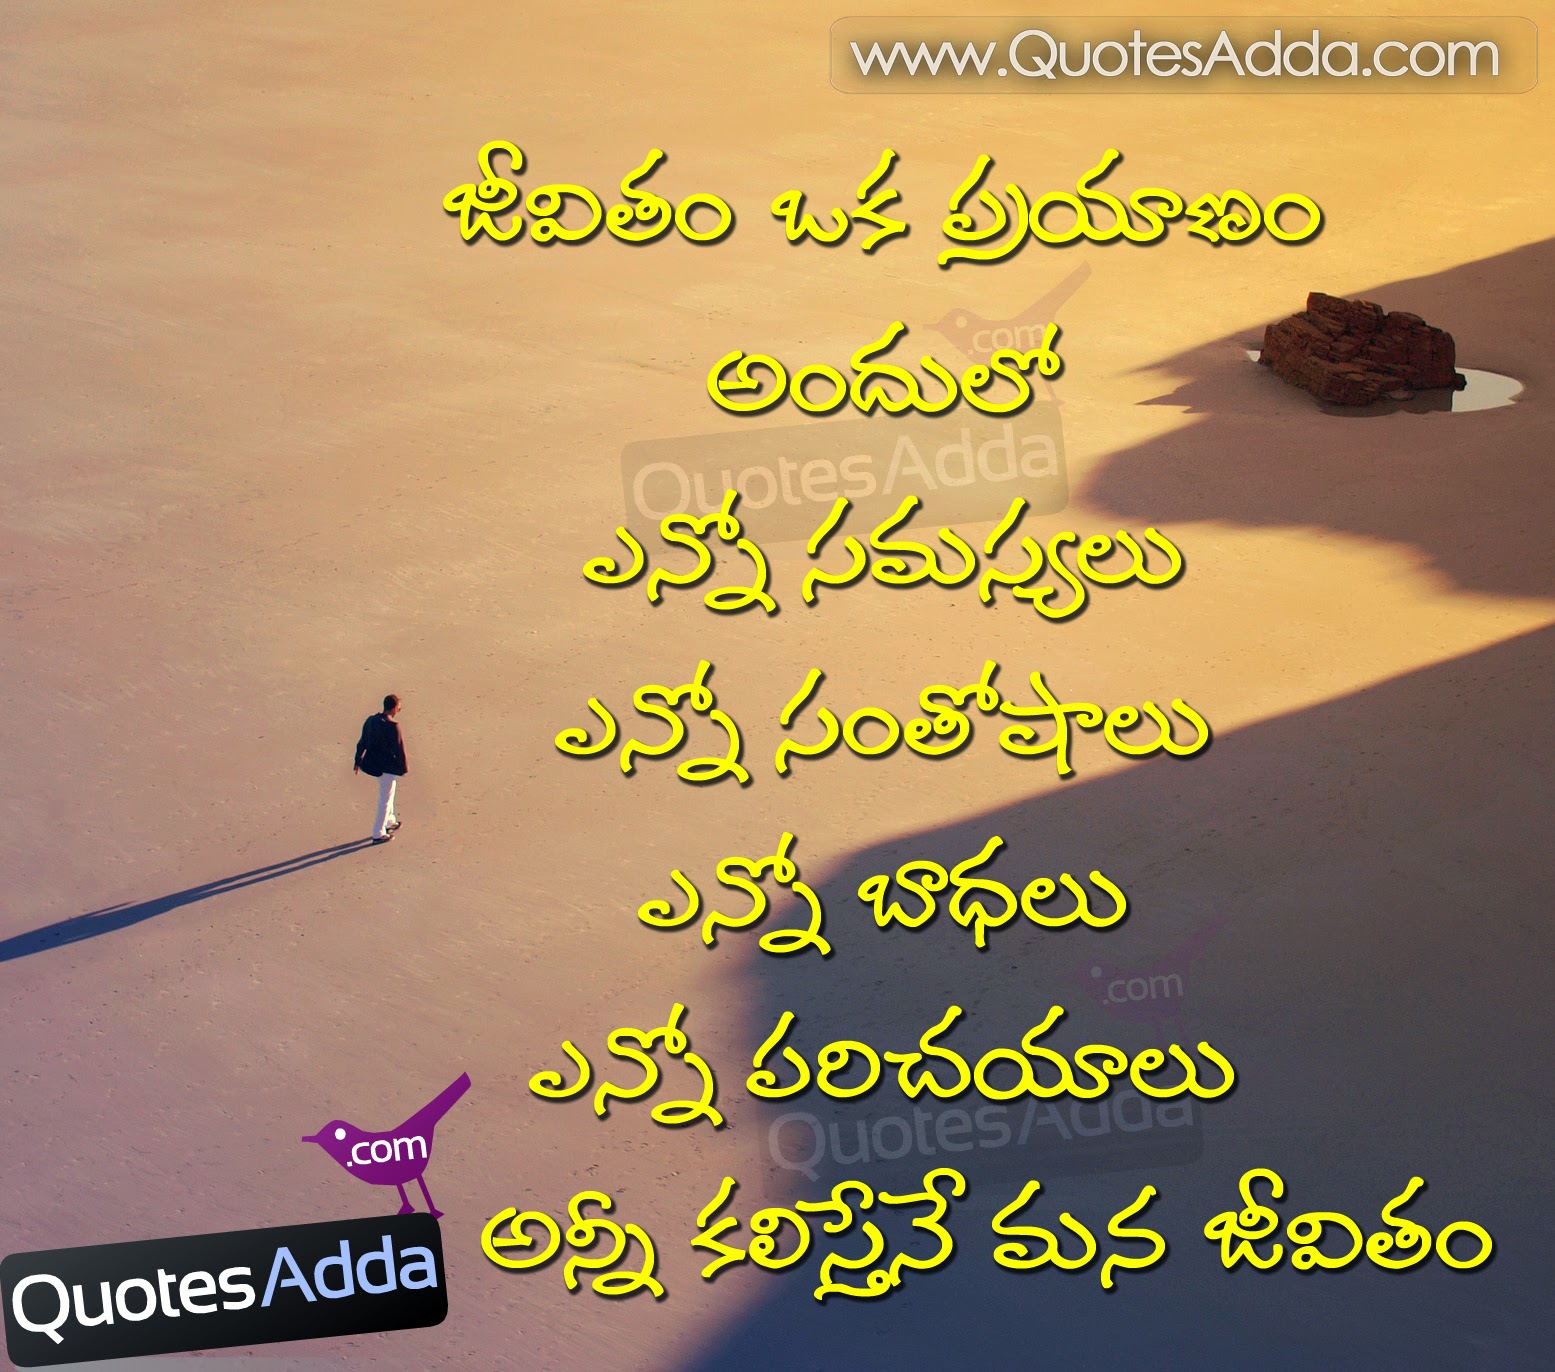 26 Beautiful Quotes Life Telugu